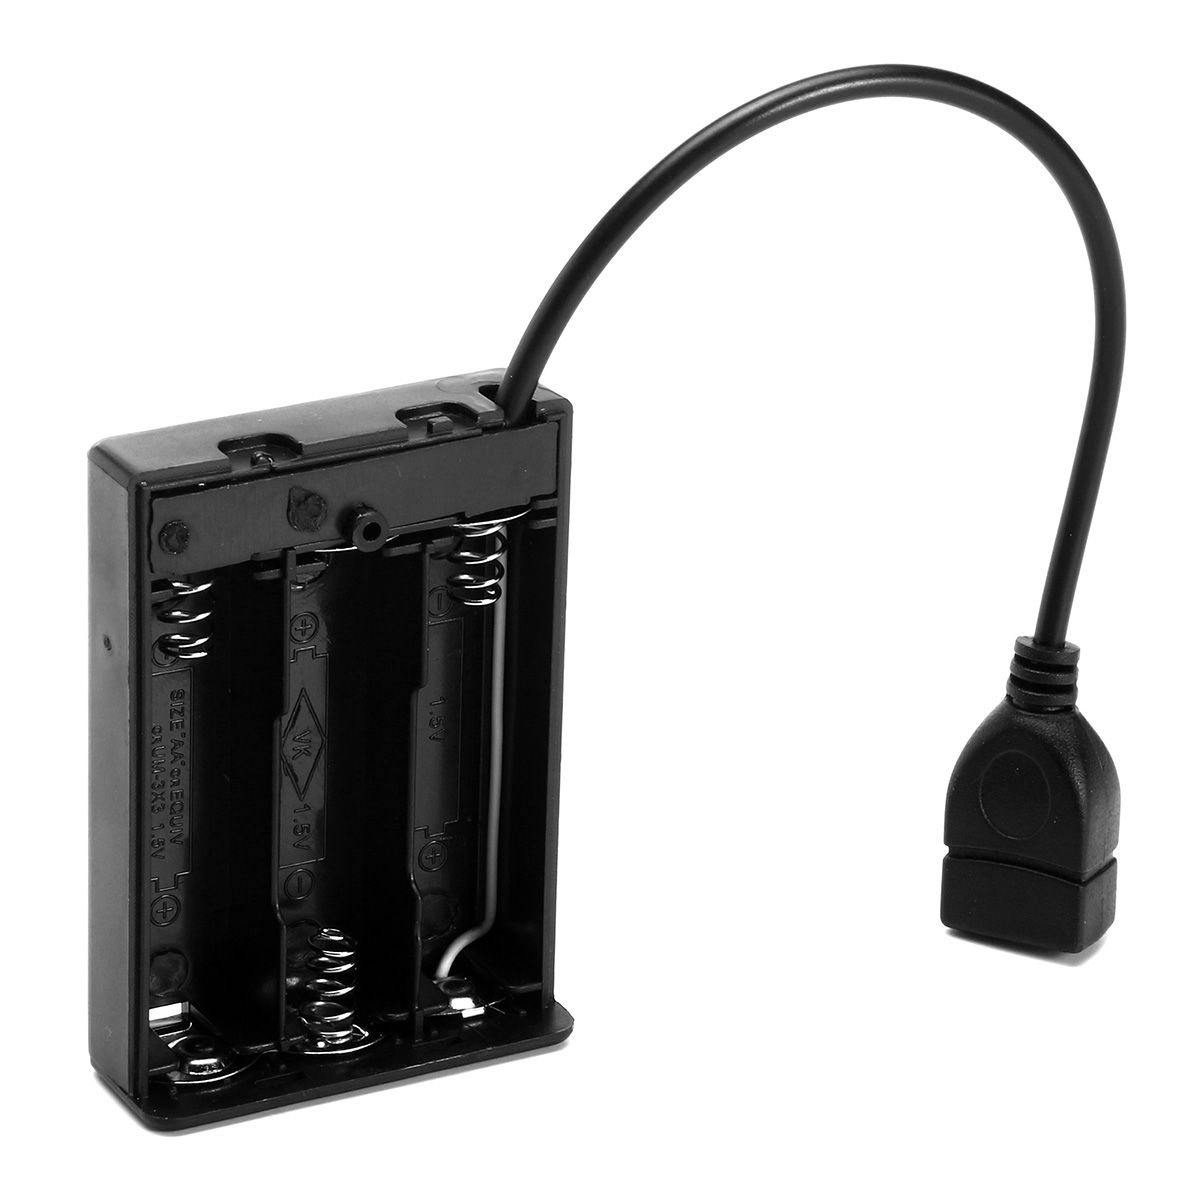 Battery-Box-With-USB-Port-For-Lego-And-Lepin-Led-Light-Kit-Sets-Bricks-Holder-1441594